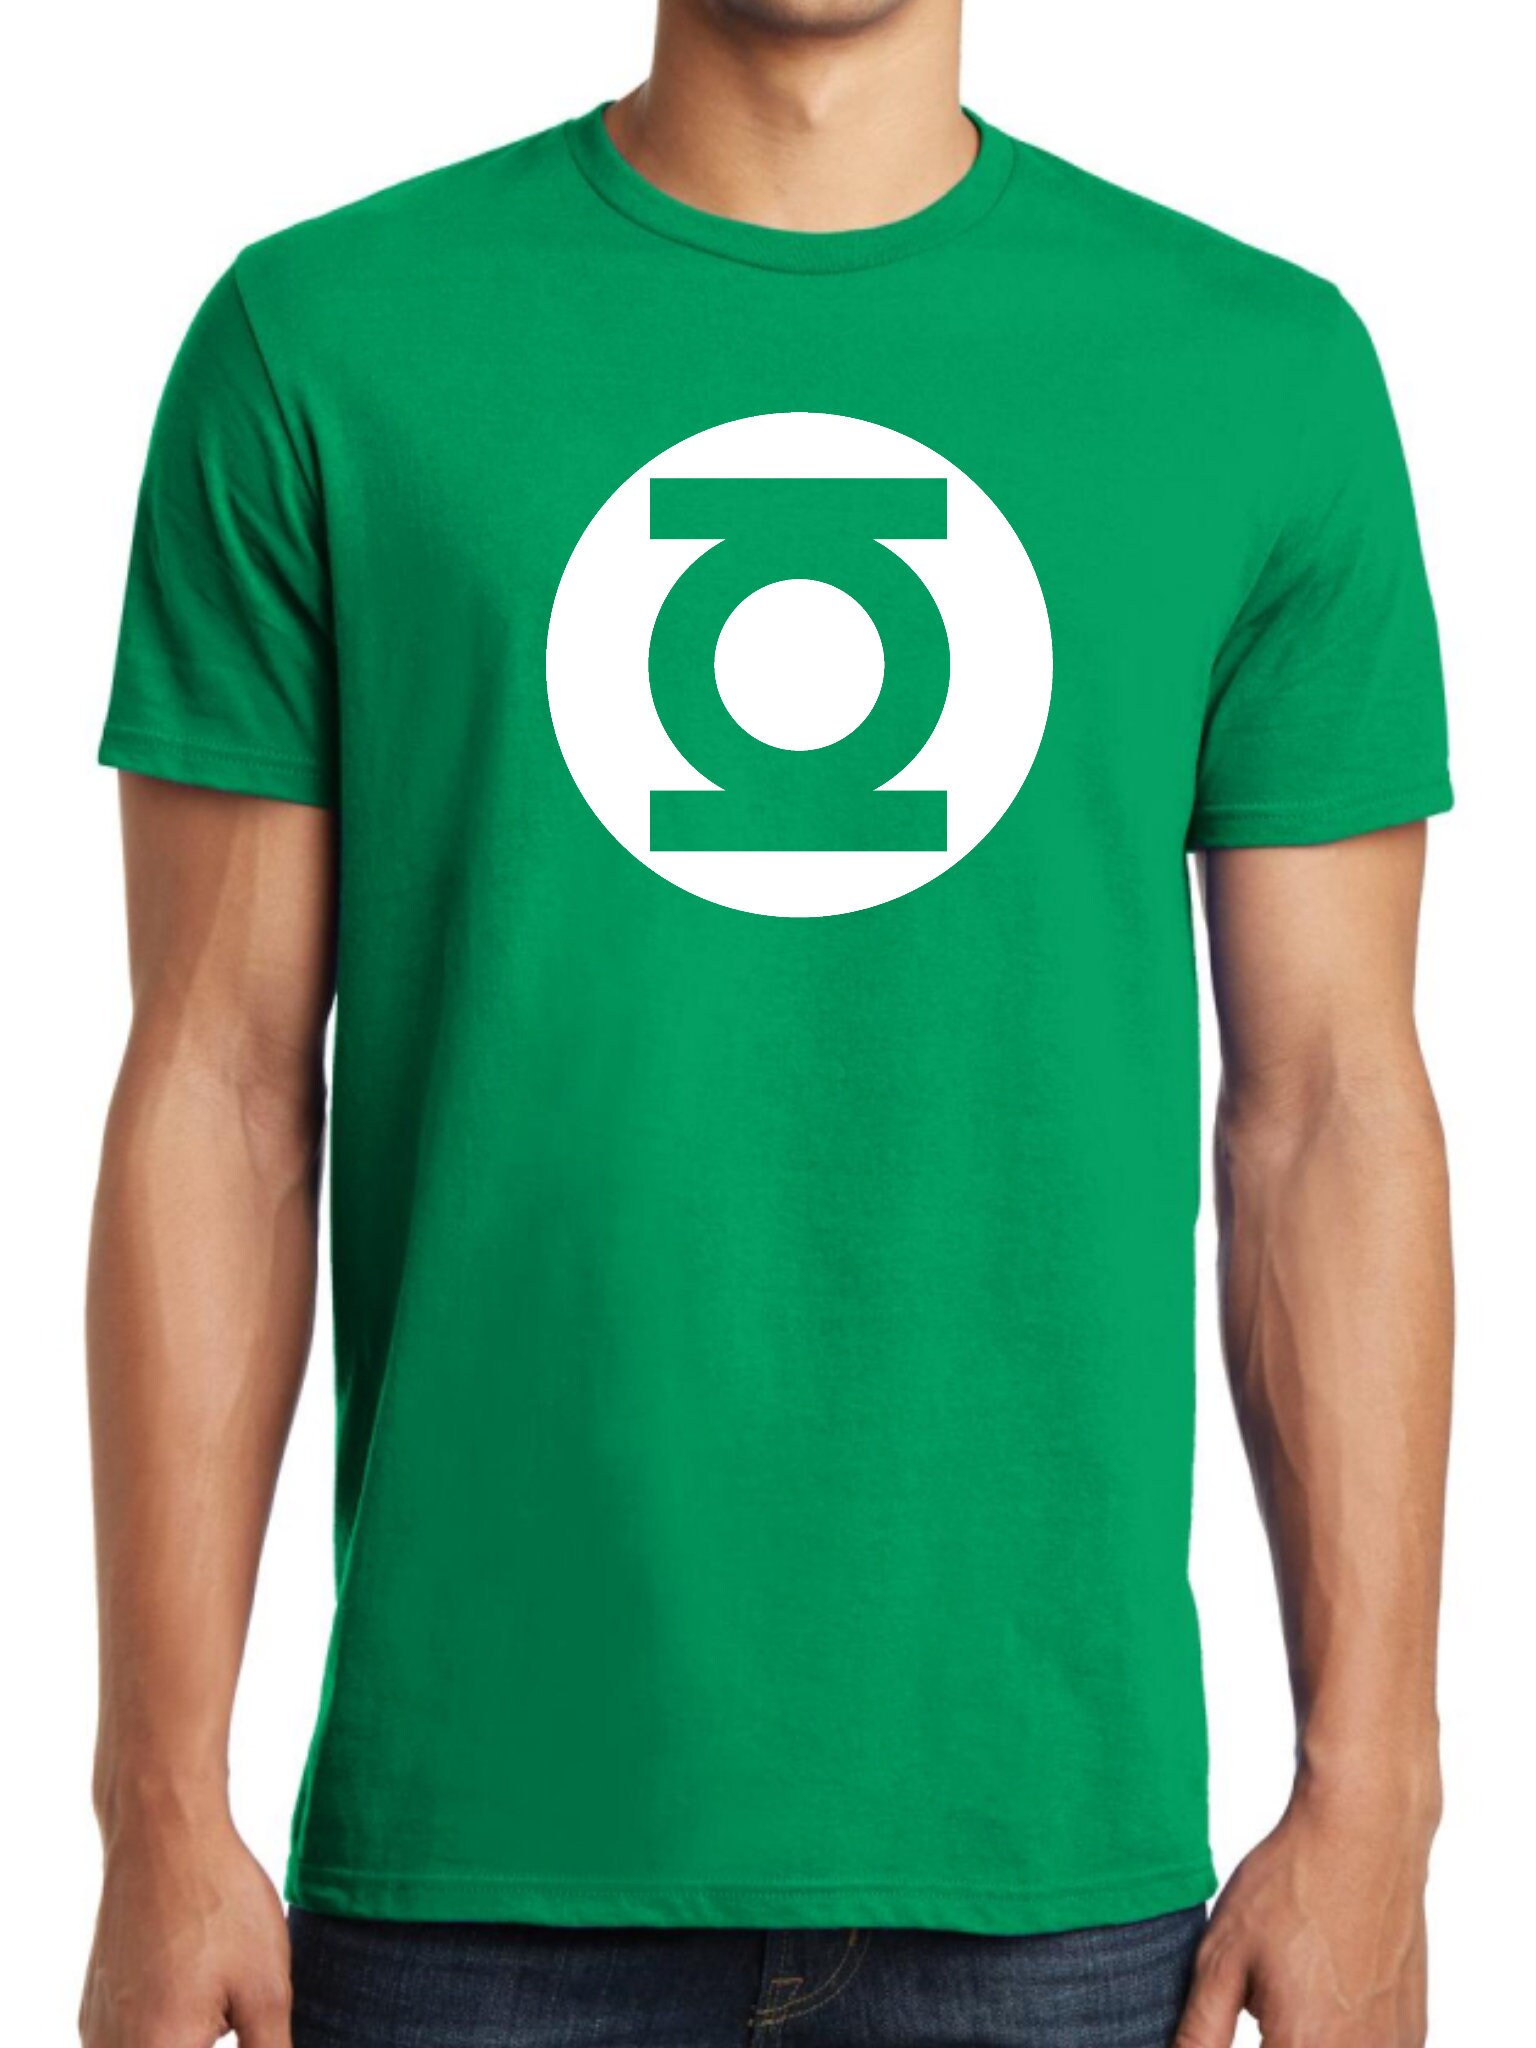 Green Lantern Logoglow in the Dark Comics Tee Cool DC - Etsy